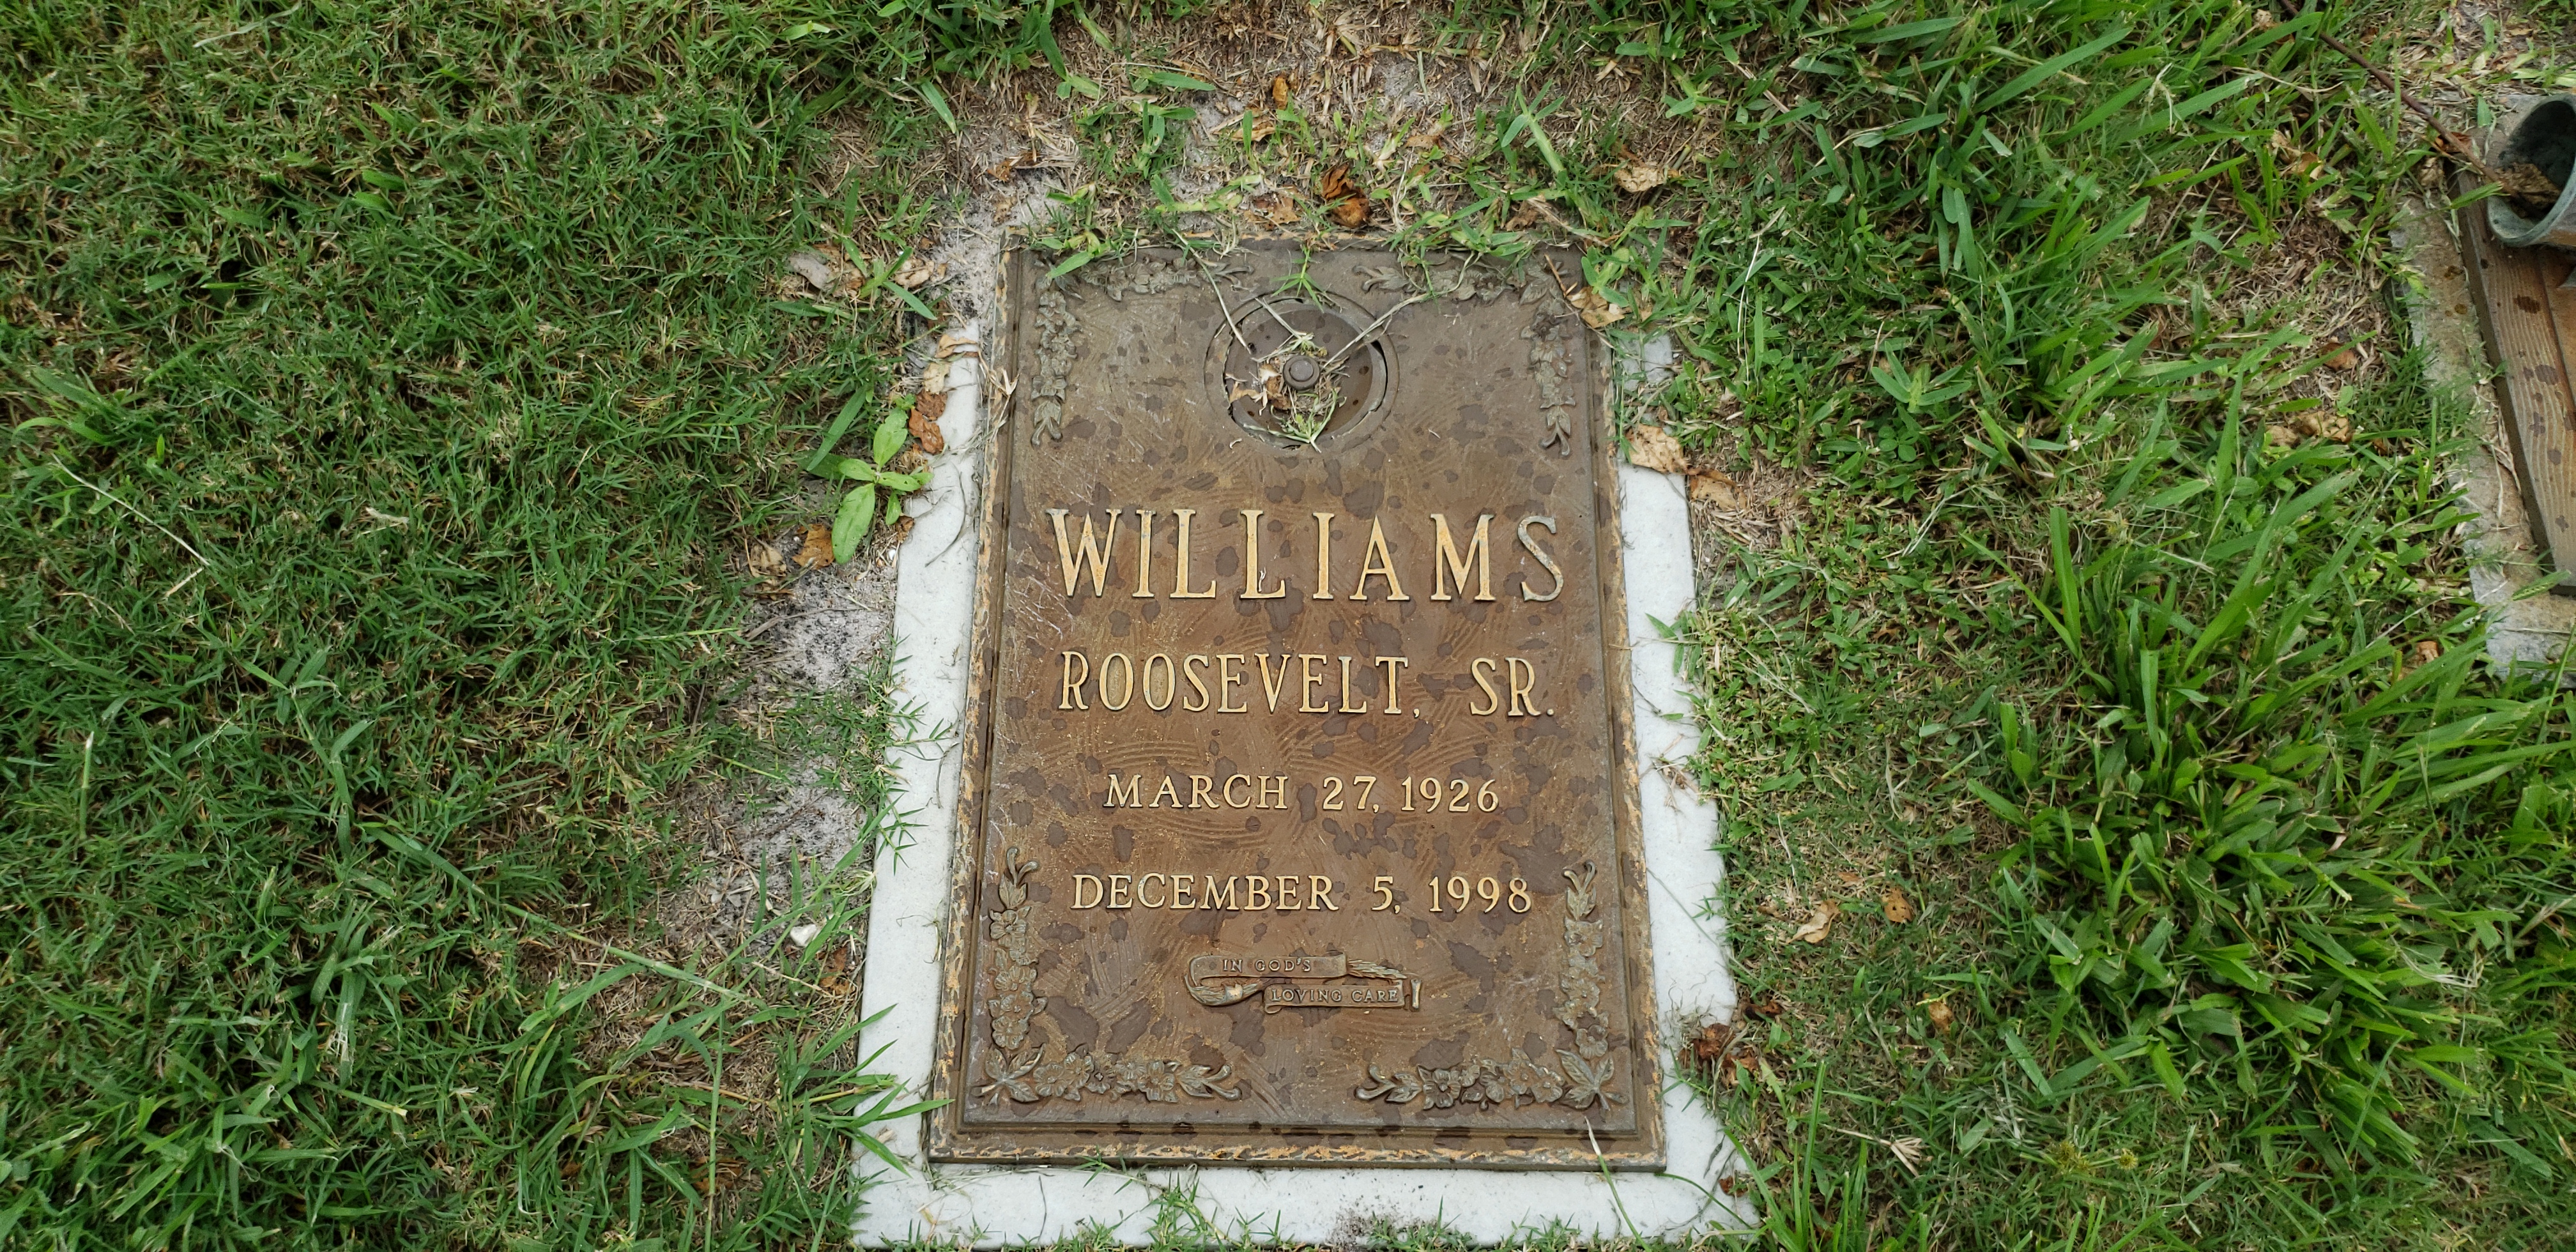 Roosevelt Williams, Sr